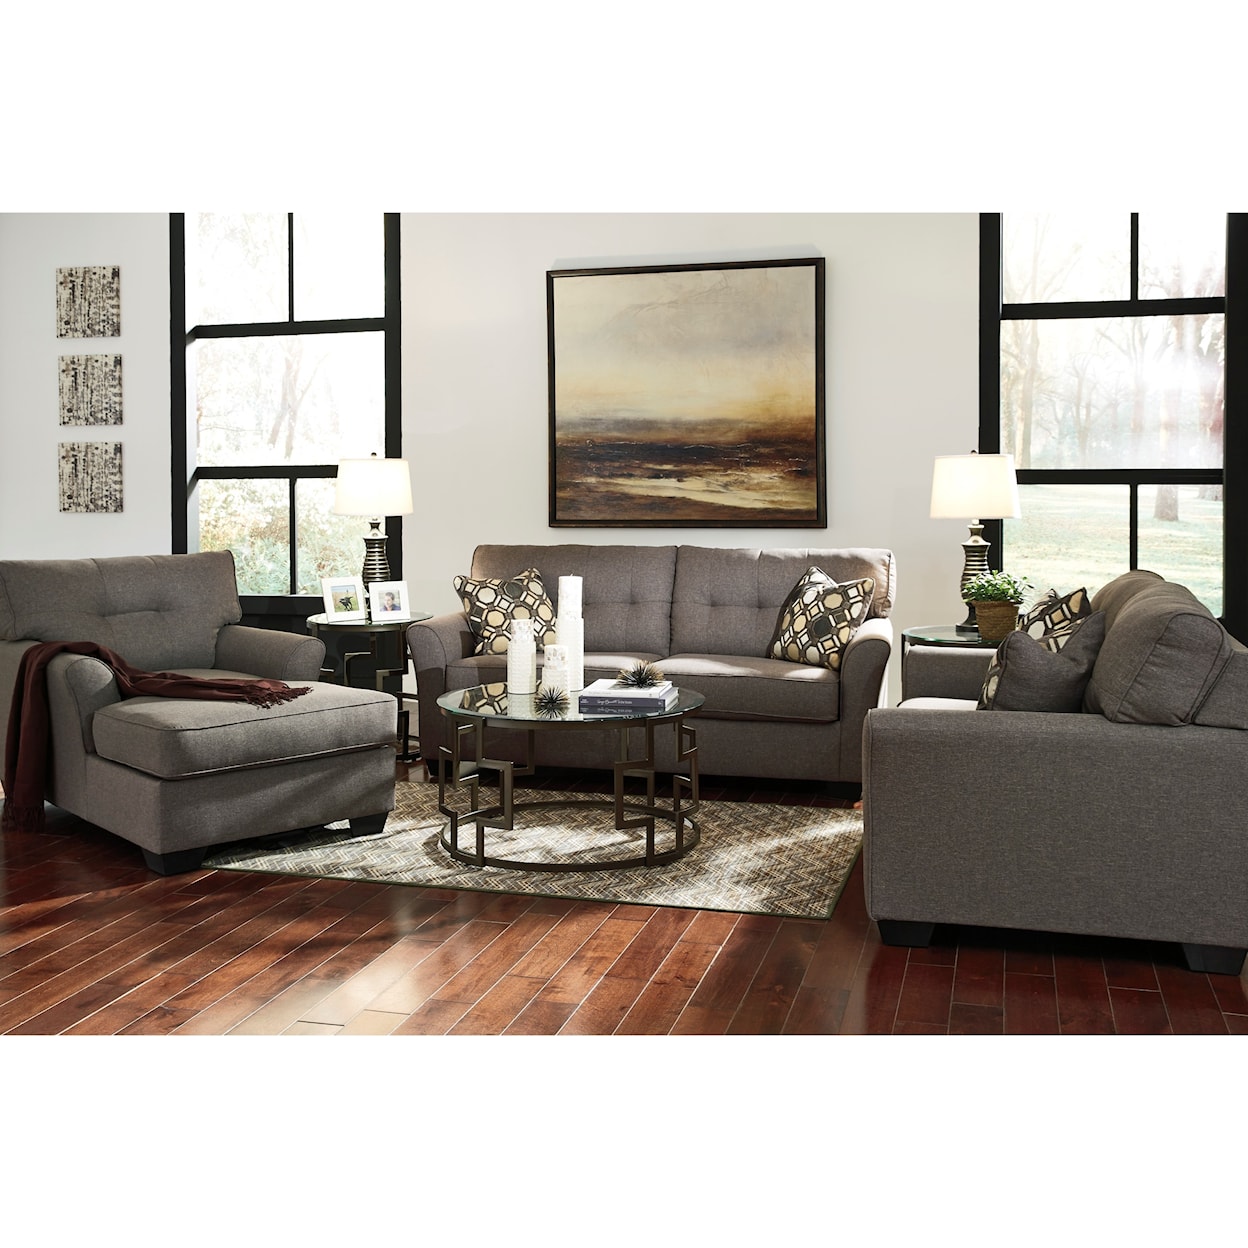 Ashley Furniture Signature Design Tibbee Stationary Living Room Group